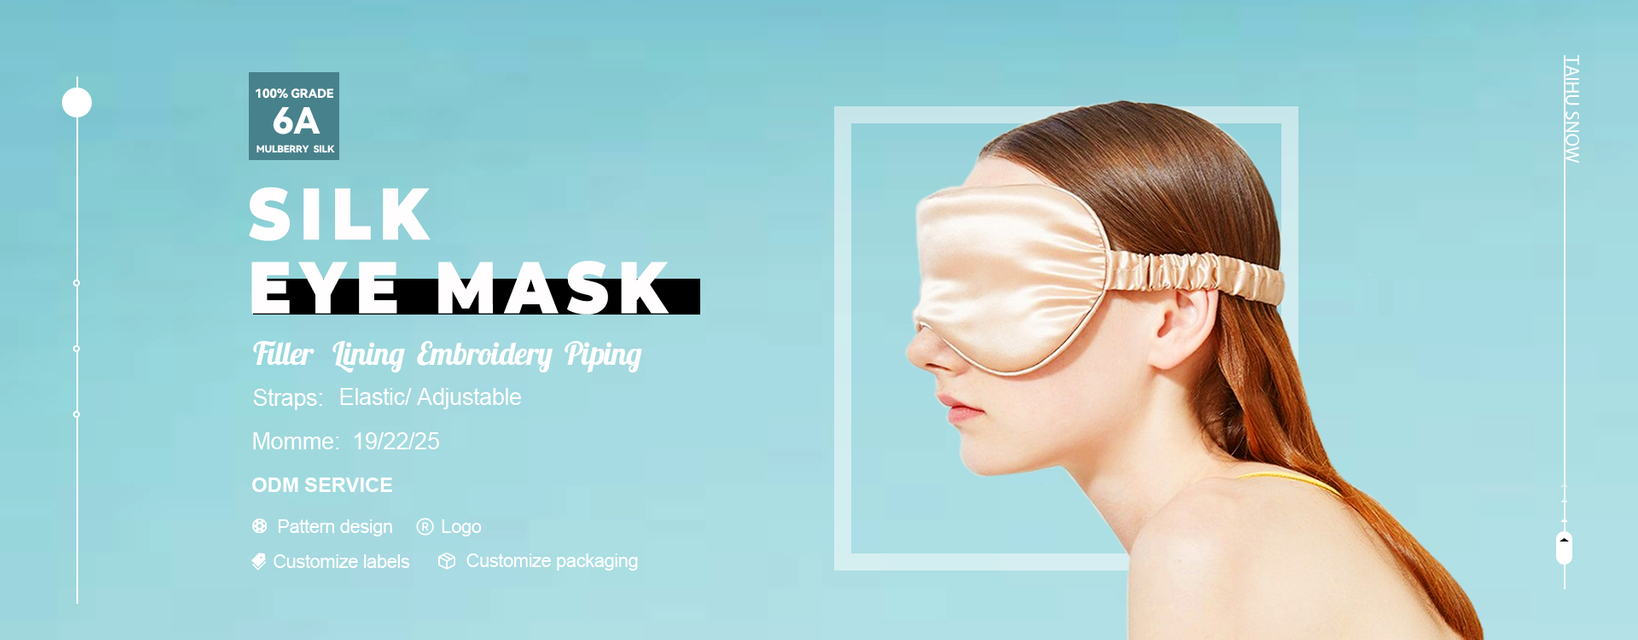 Silk eye mask